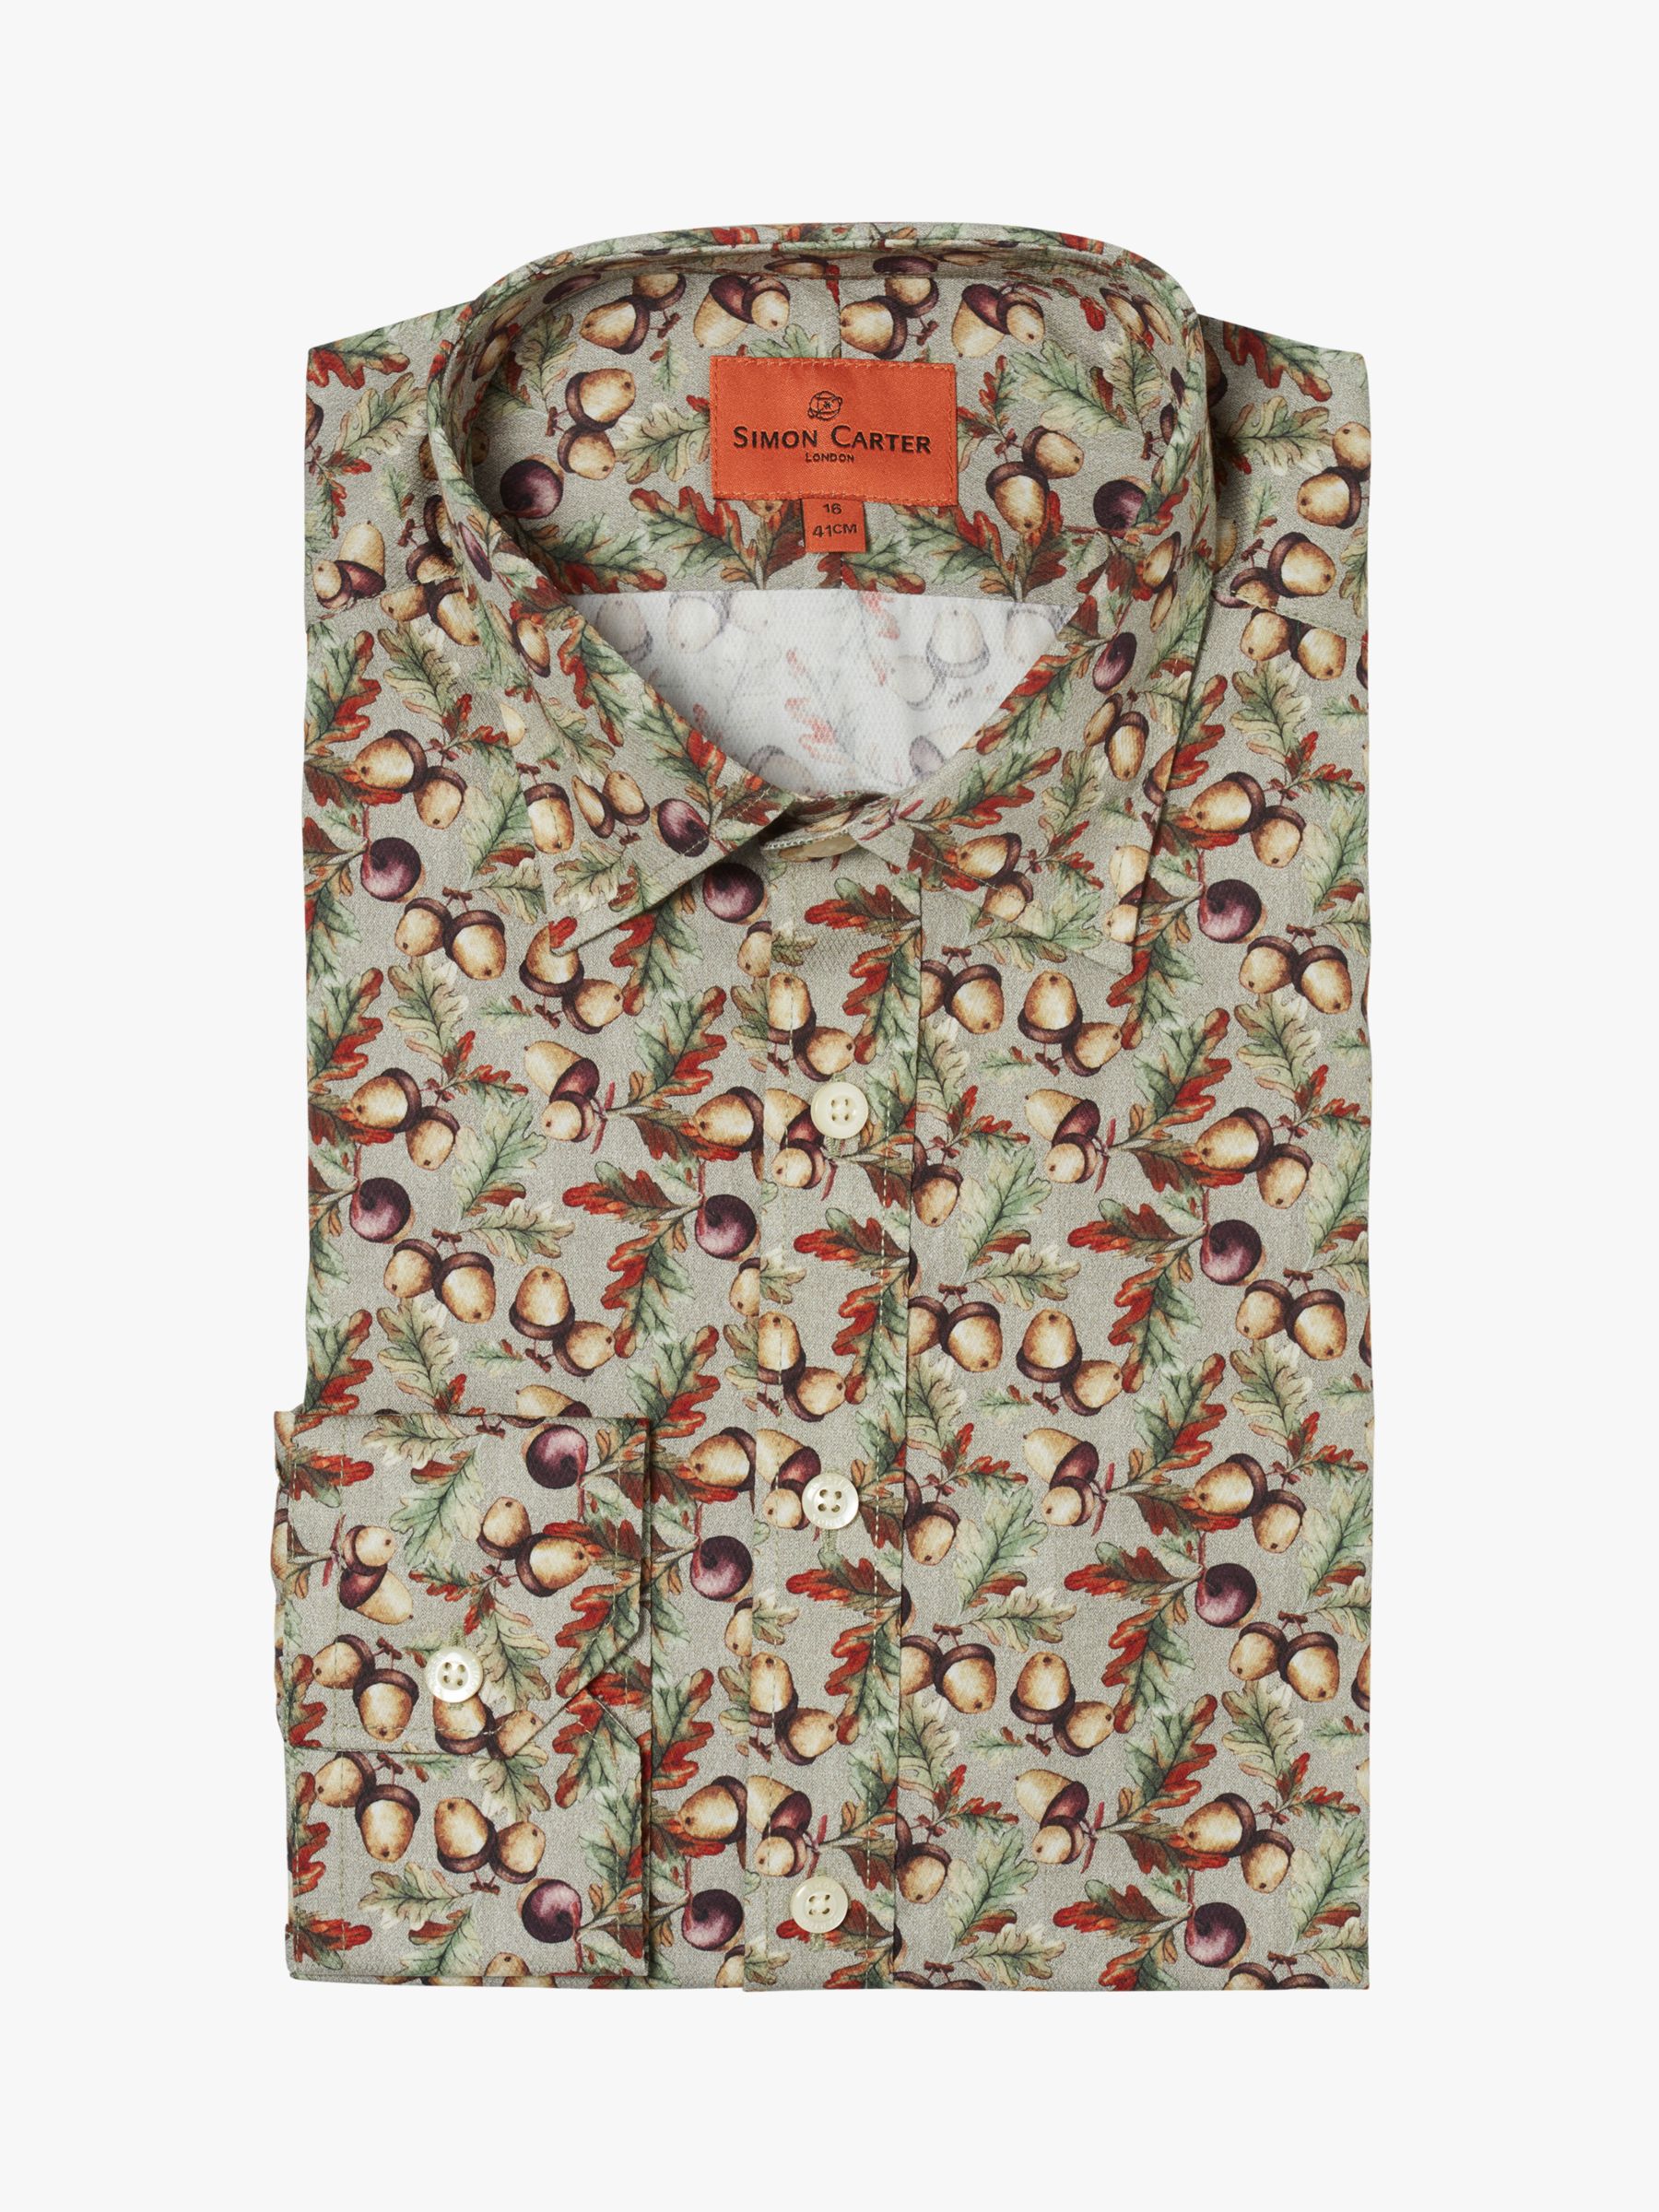 Simon Carter Acorn Long Sleeve Shirt, Beige/Multi, 15